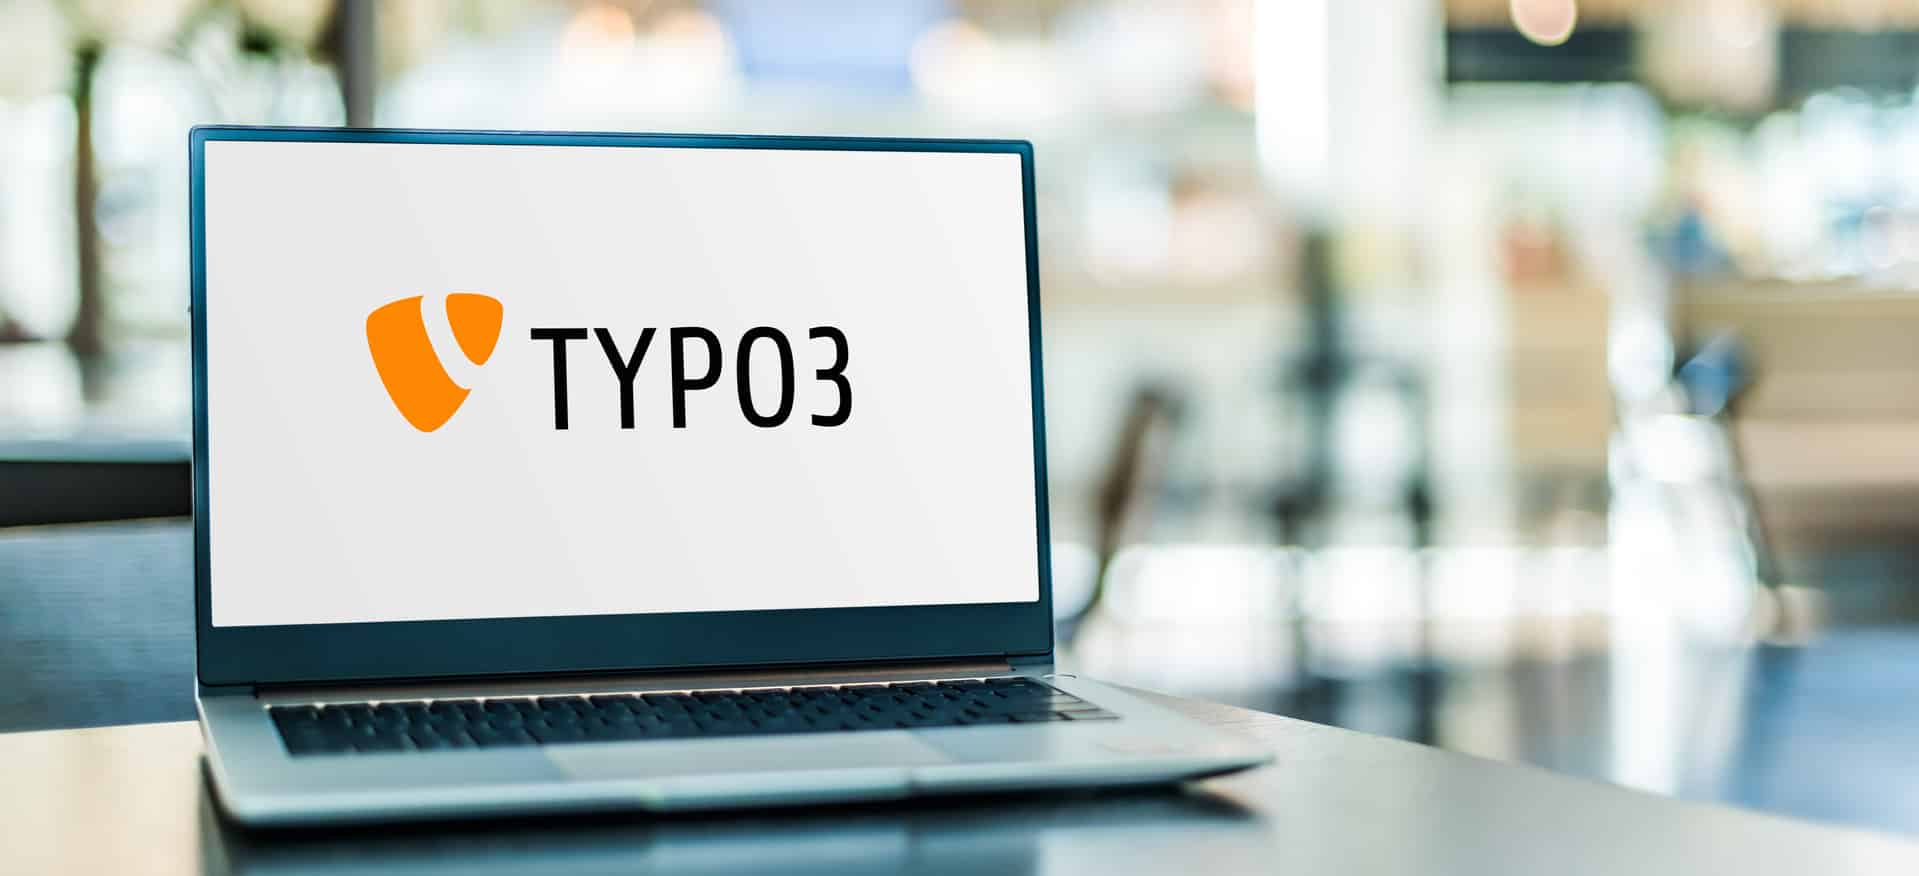 Laptop mit TYPO3